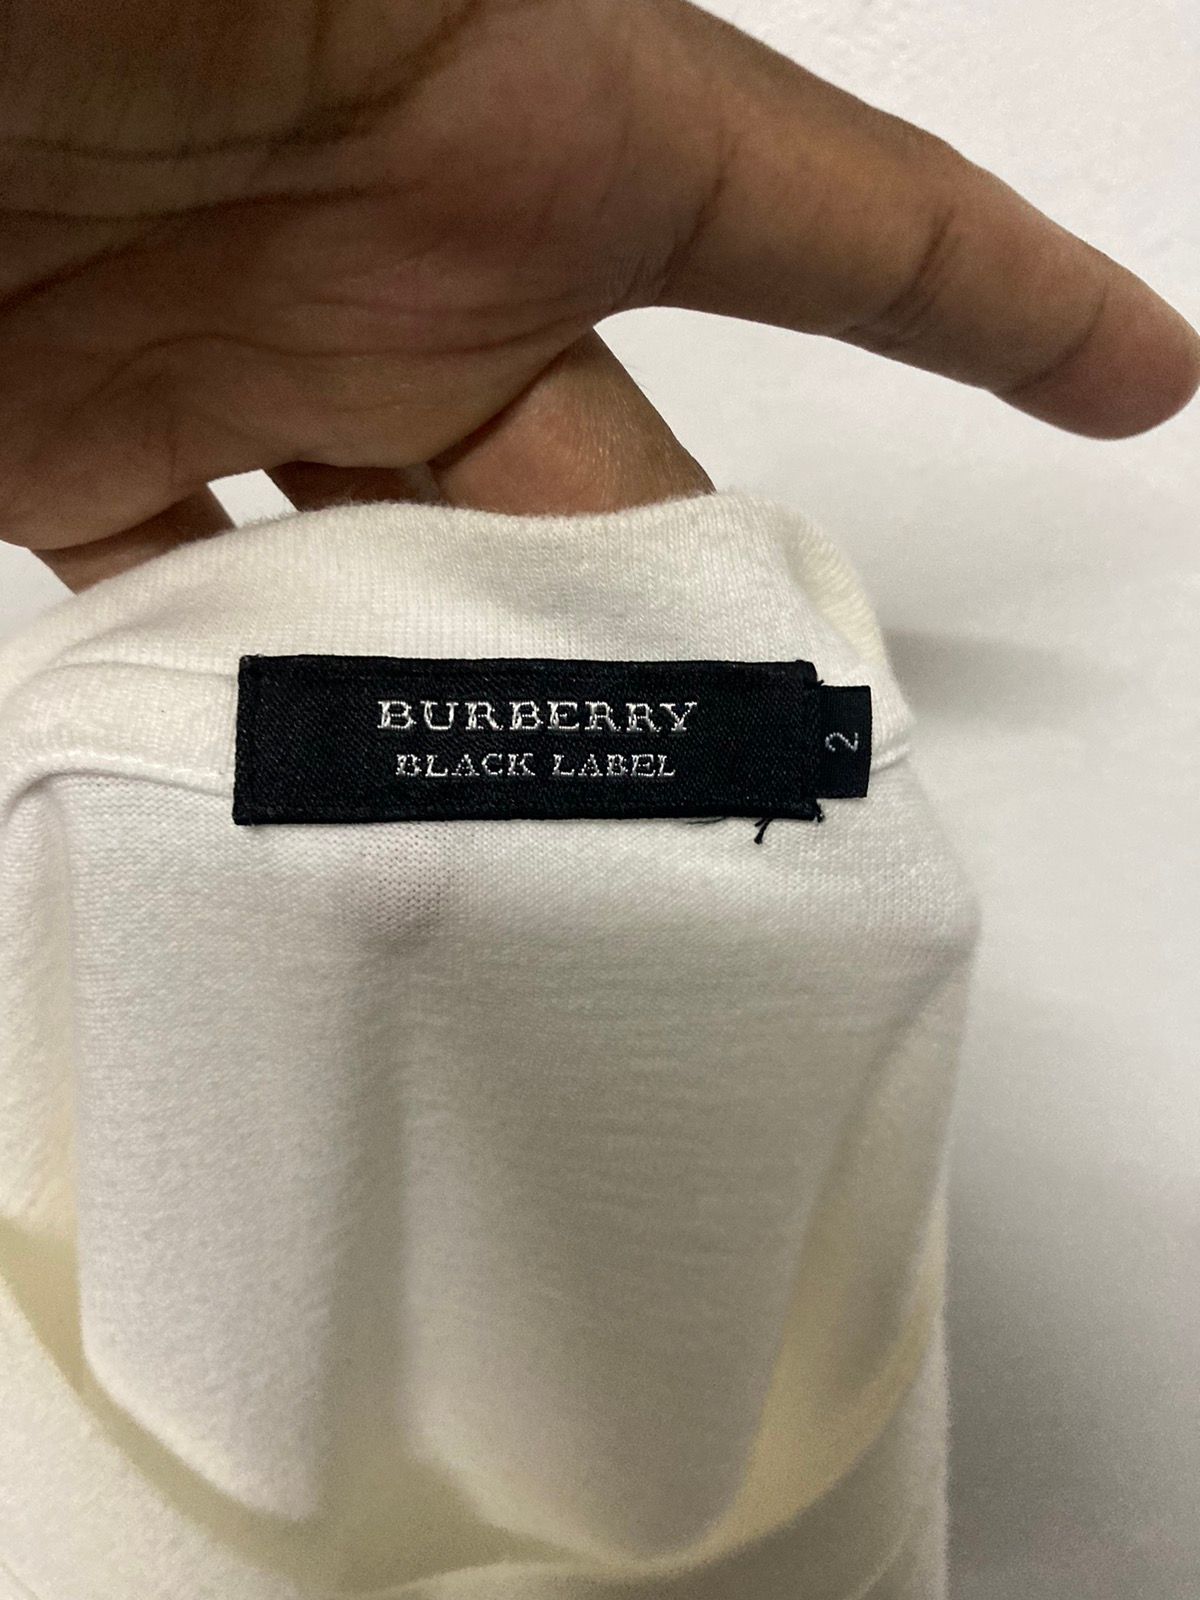 Burberry Black Label T-shirt - 9